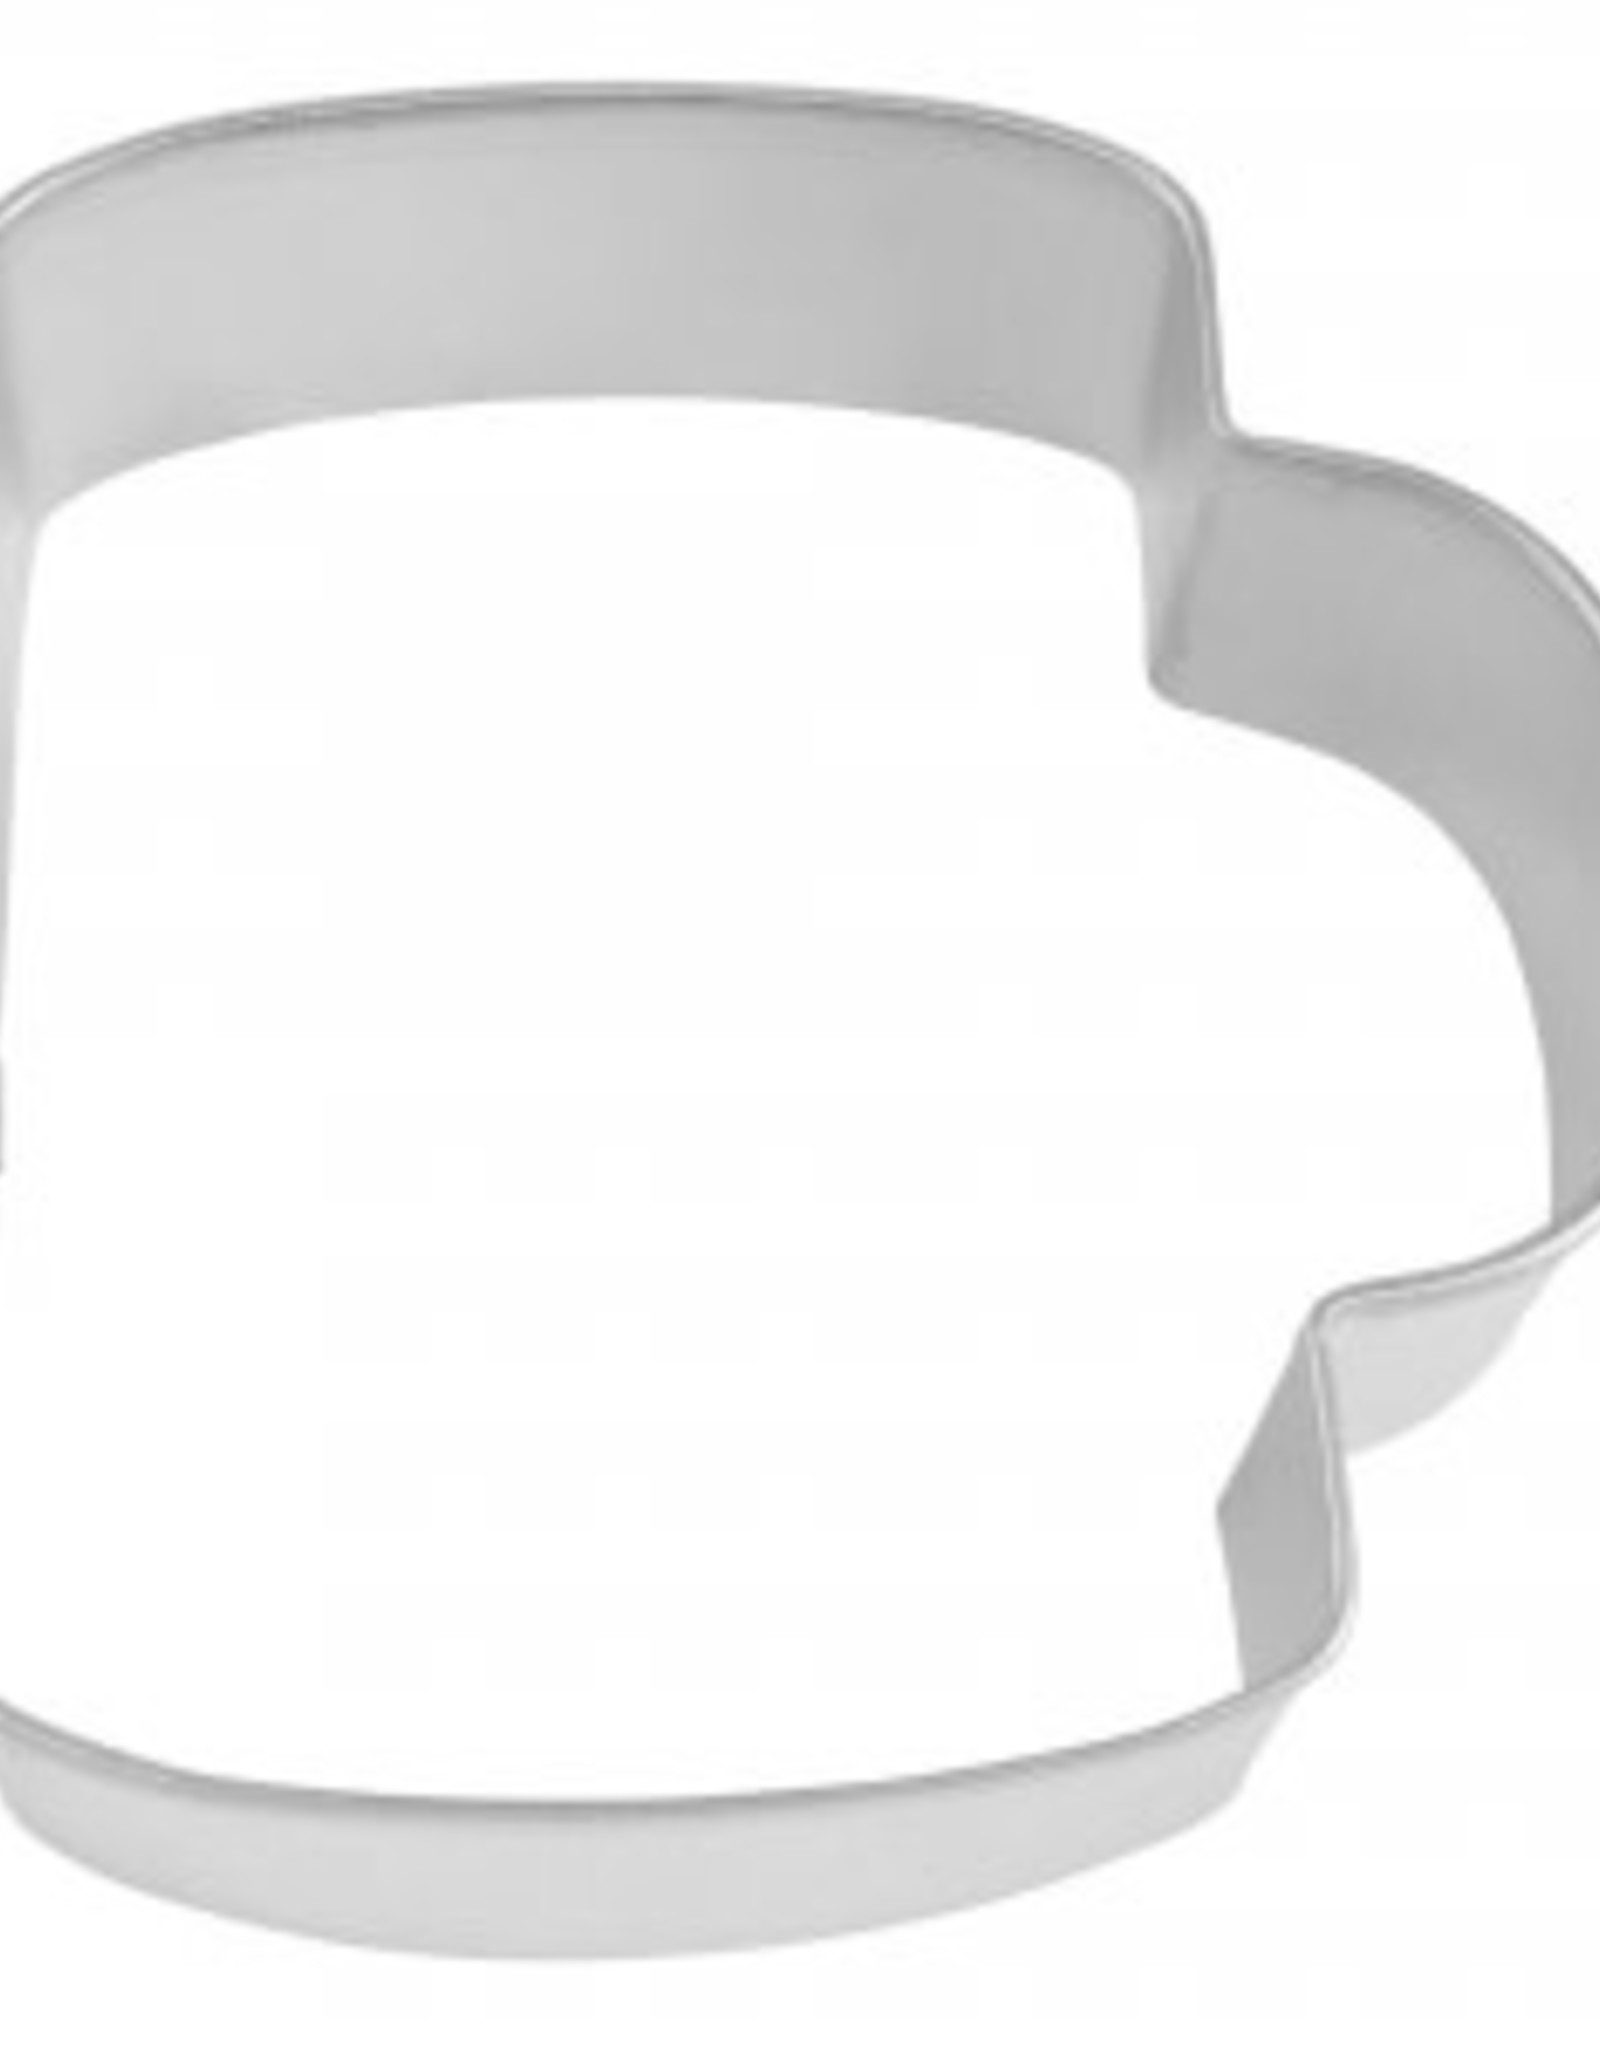 Coffee Mug/Purse Cookie Cutter